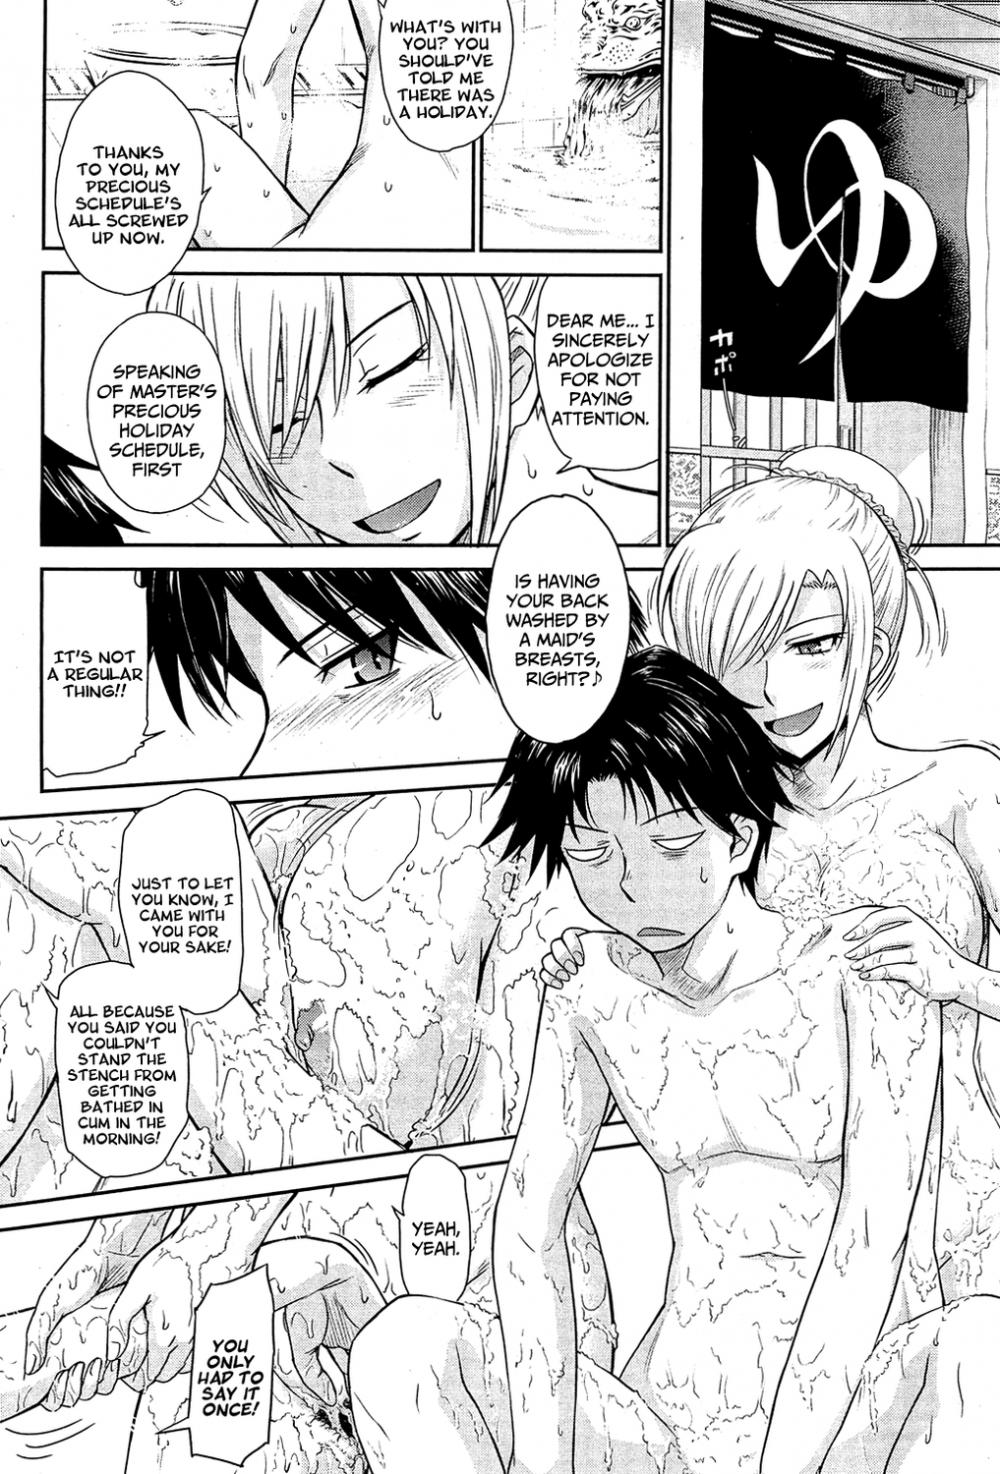 Hentai Manga Comic-Pathetic Prince and Spiteful Maid-Chapter 2-2